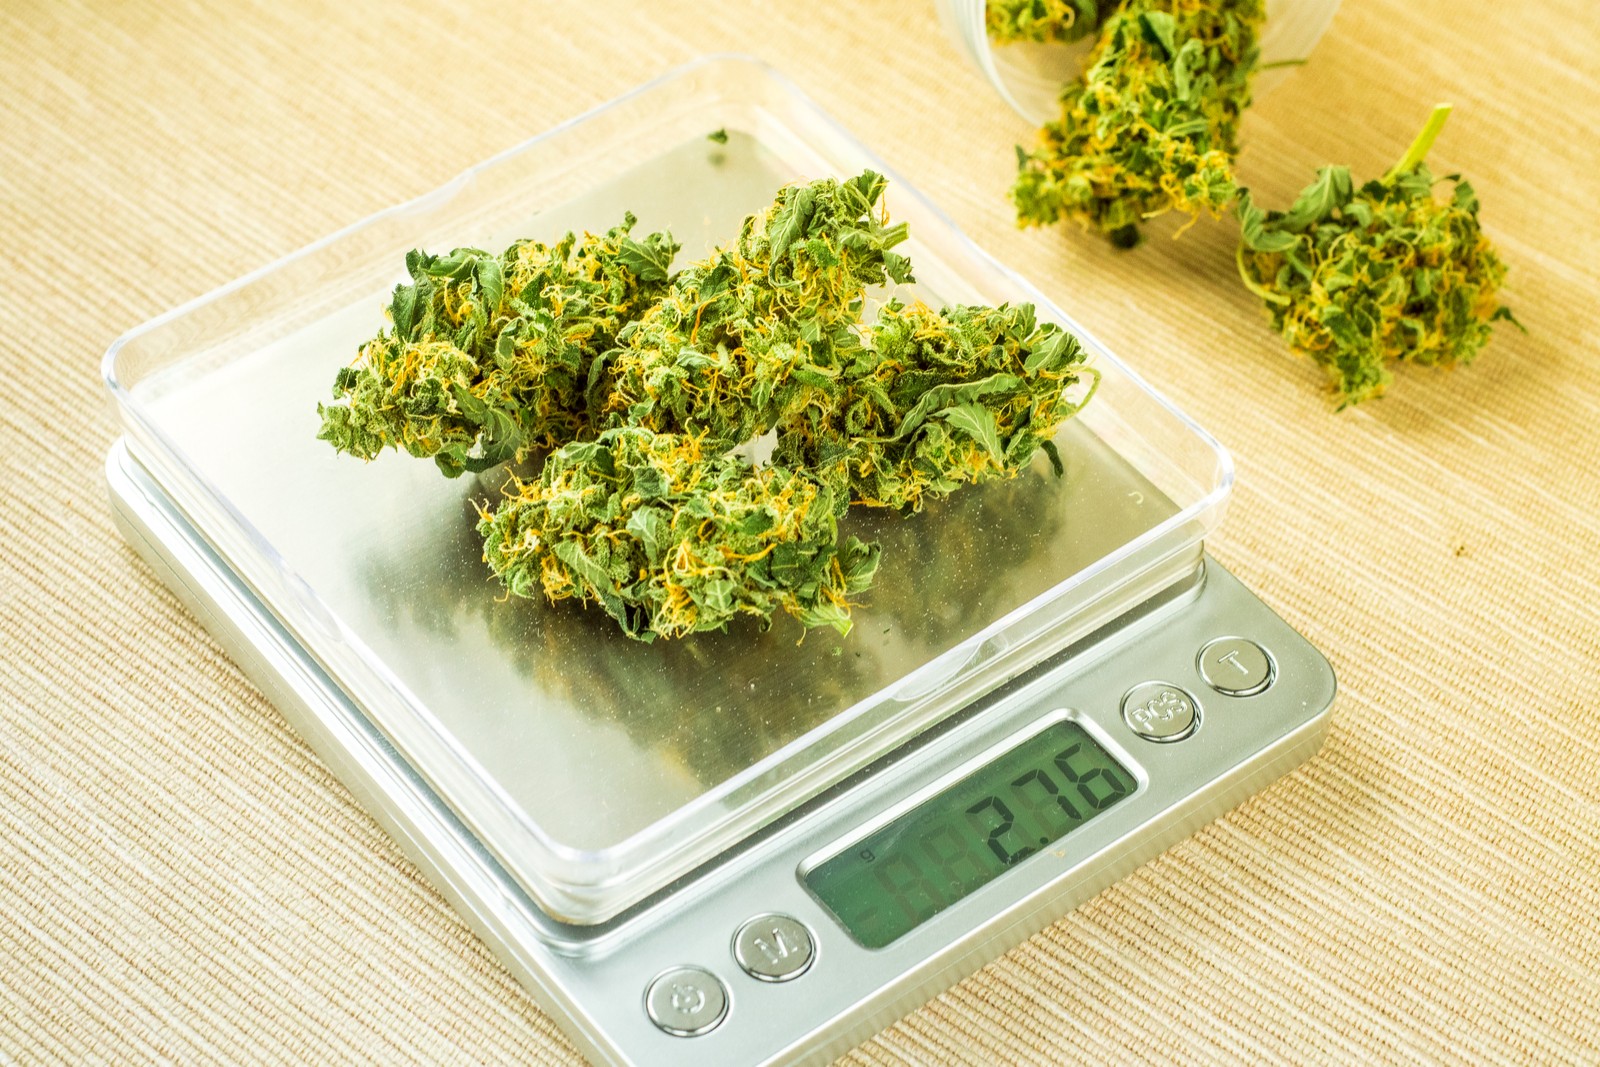 https://mgmagazine.com/wp-content/uploads/2018/09/Cannabis-dispensary-scales-mg-Retailer.jpg